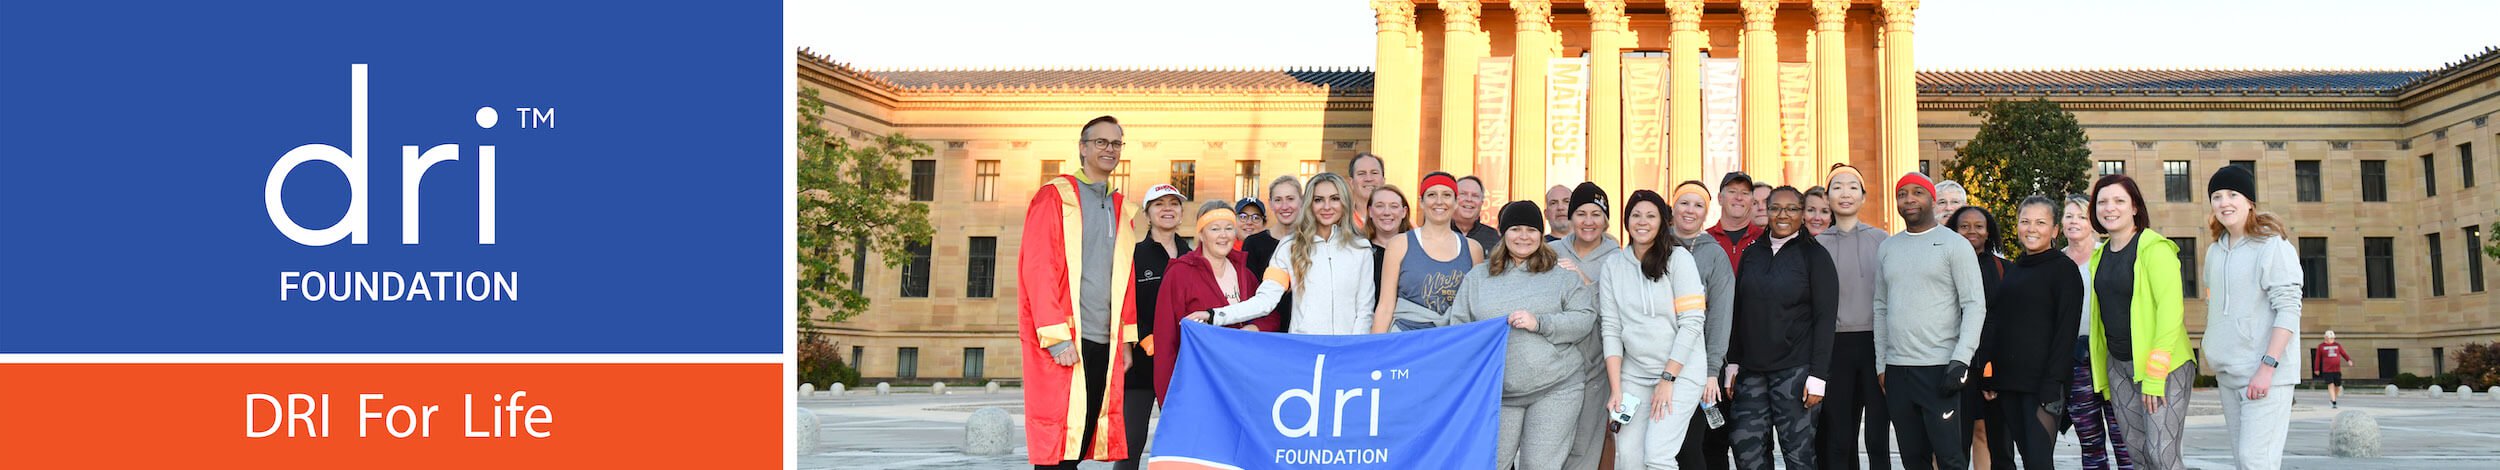 DRI for Life, DRI Foundation logo